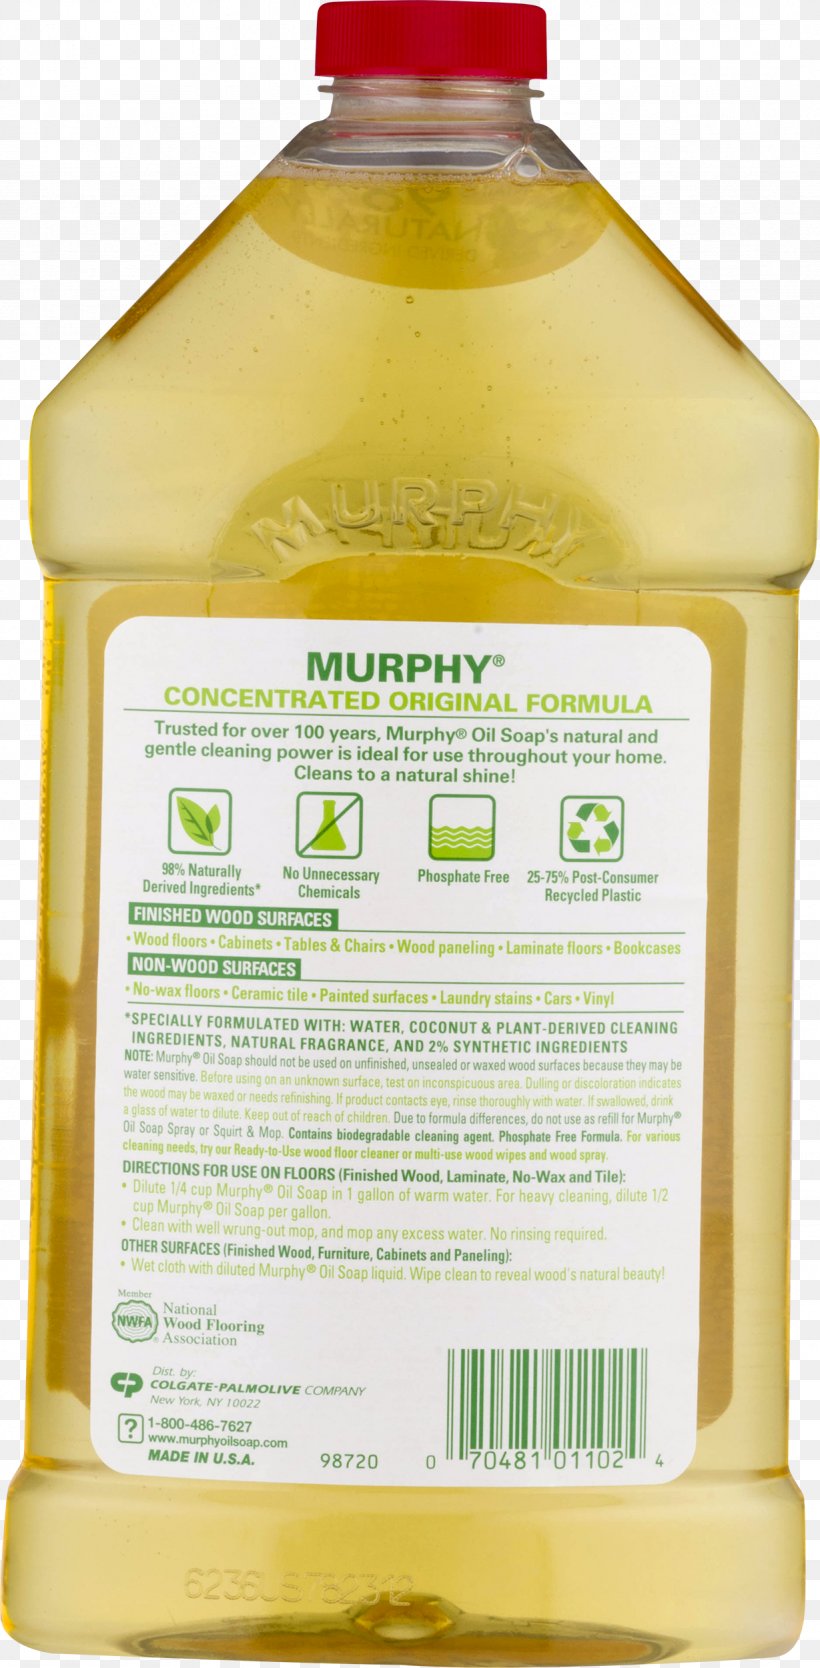 Murphy Oil Soap Wood Flooring Floor, How To Use Murphy Oil Soap On Laminate Floors